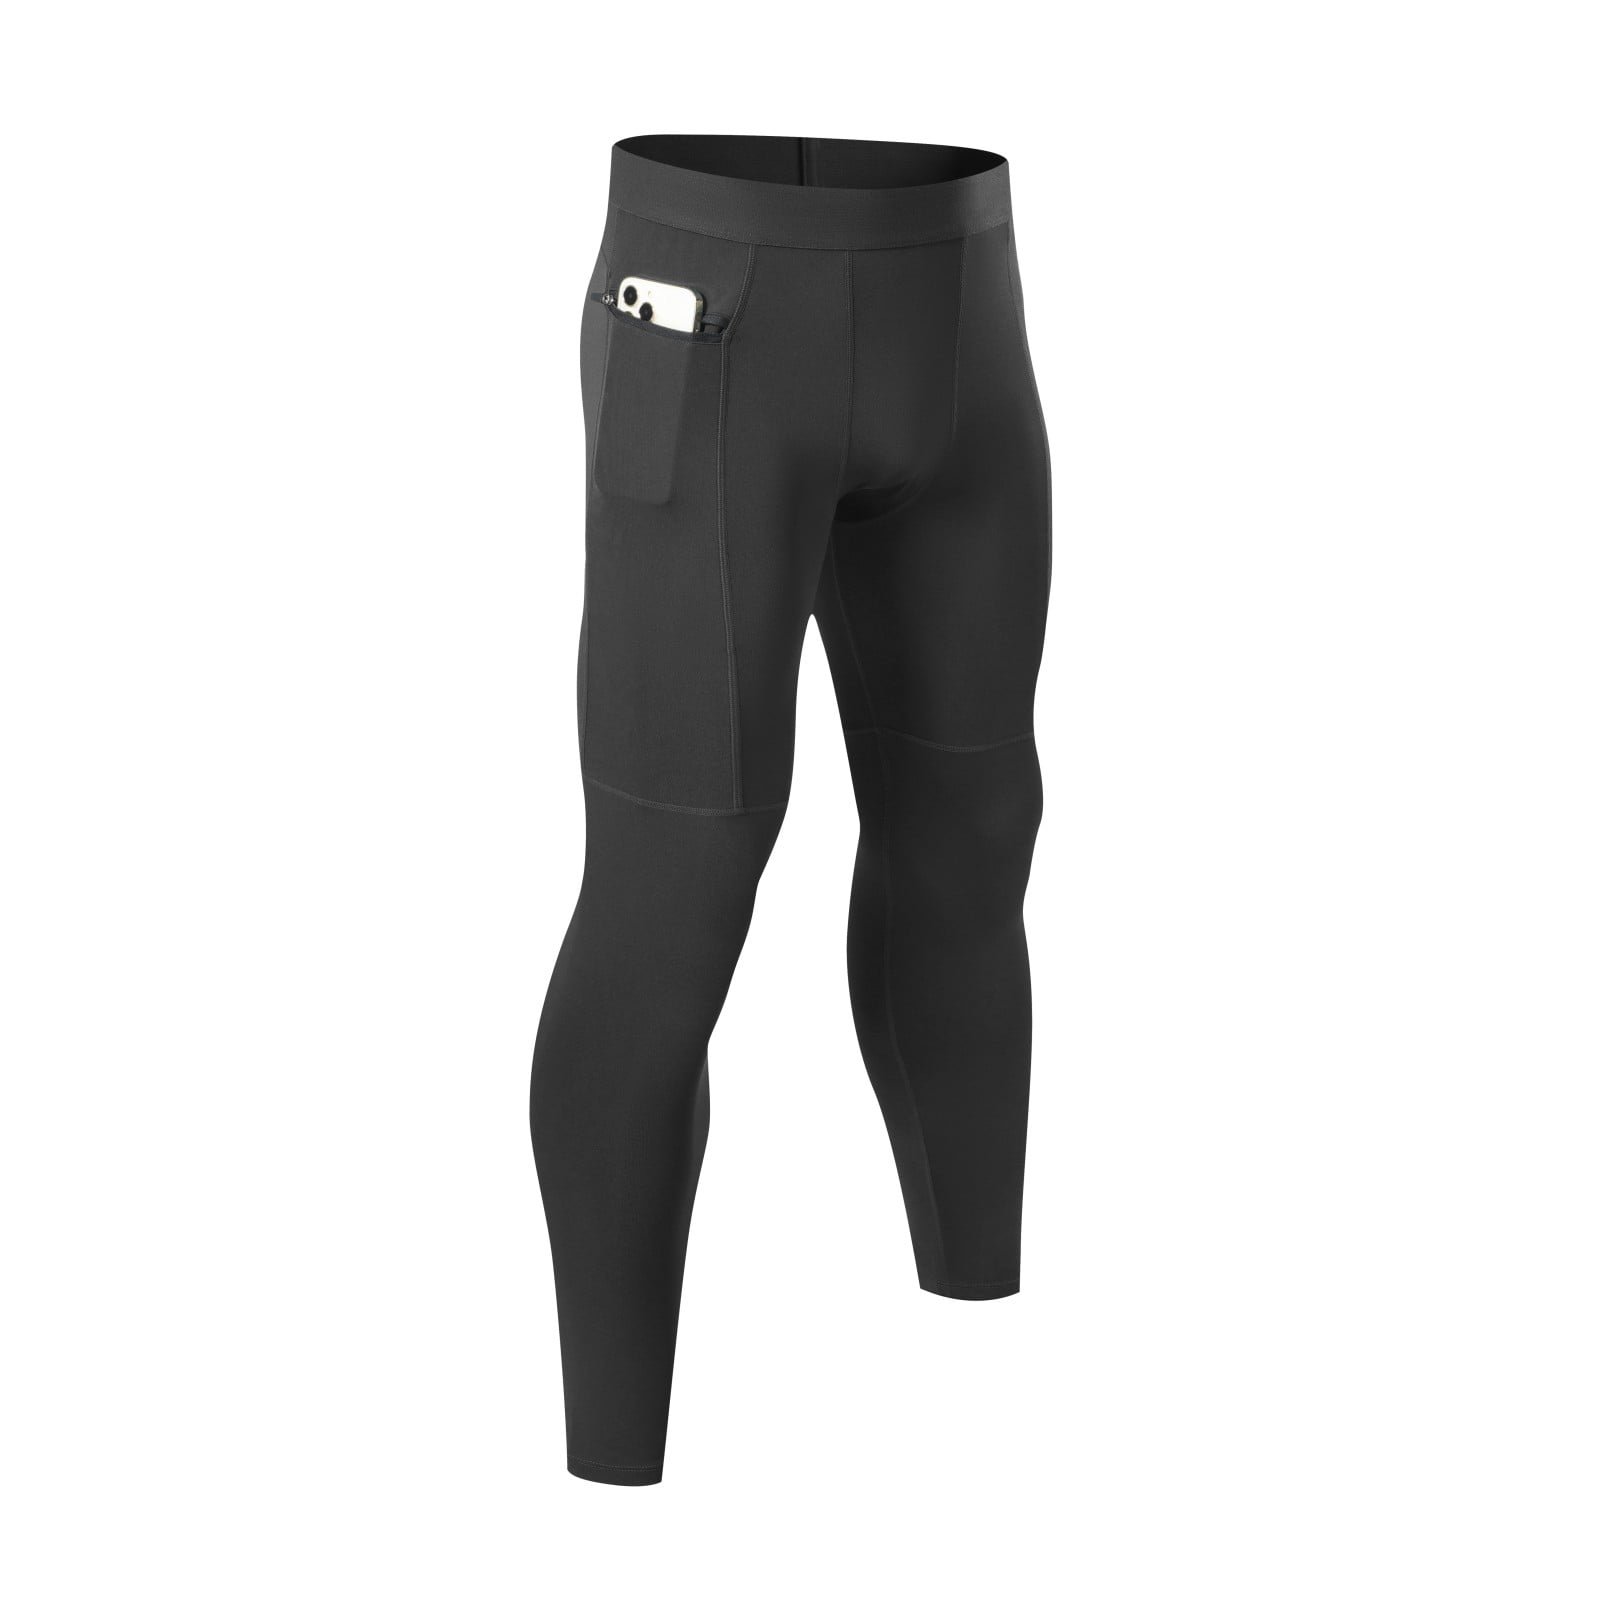 Compression Pants for Men's Running Tights Leggings Althletic Workout ...